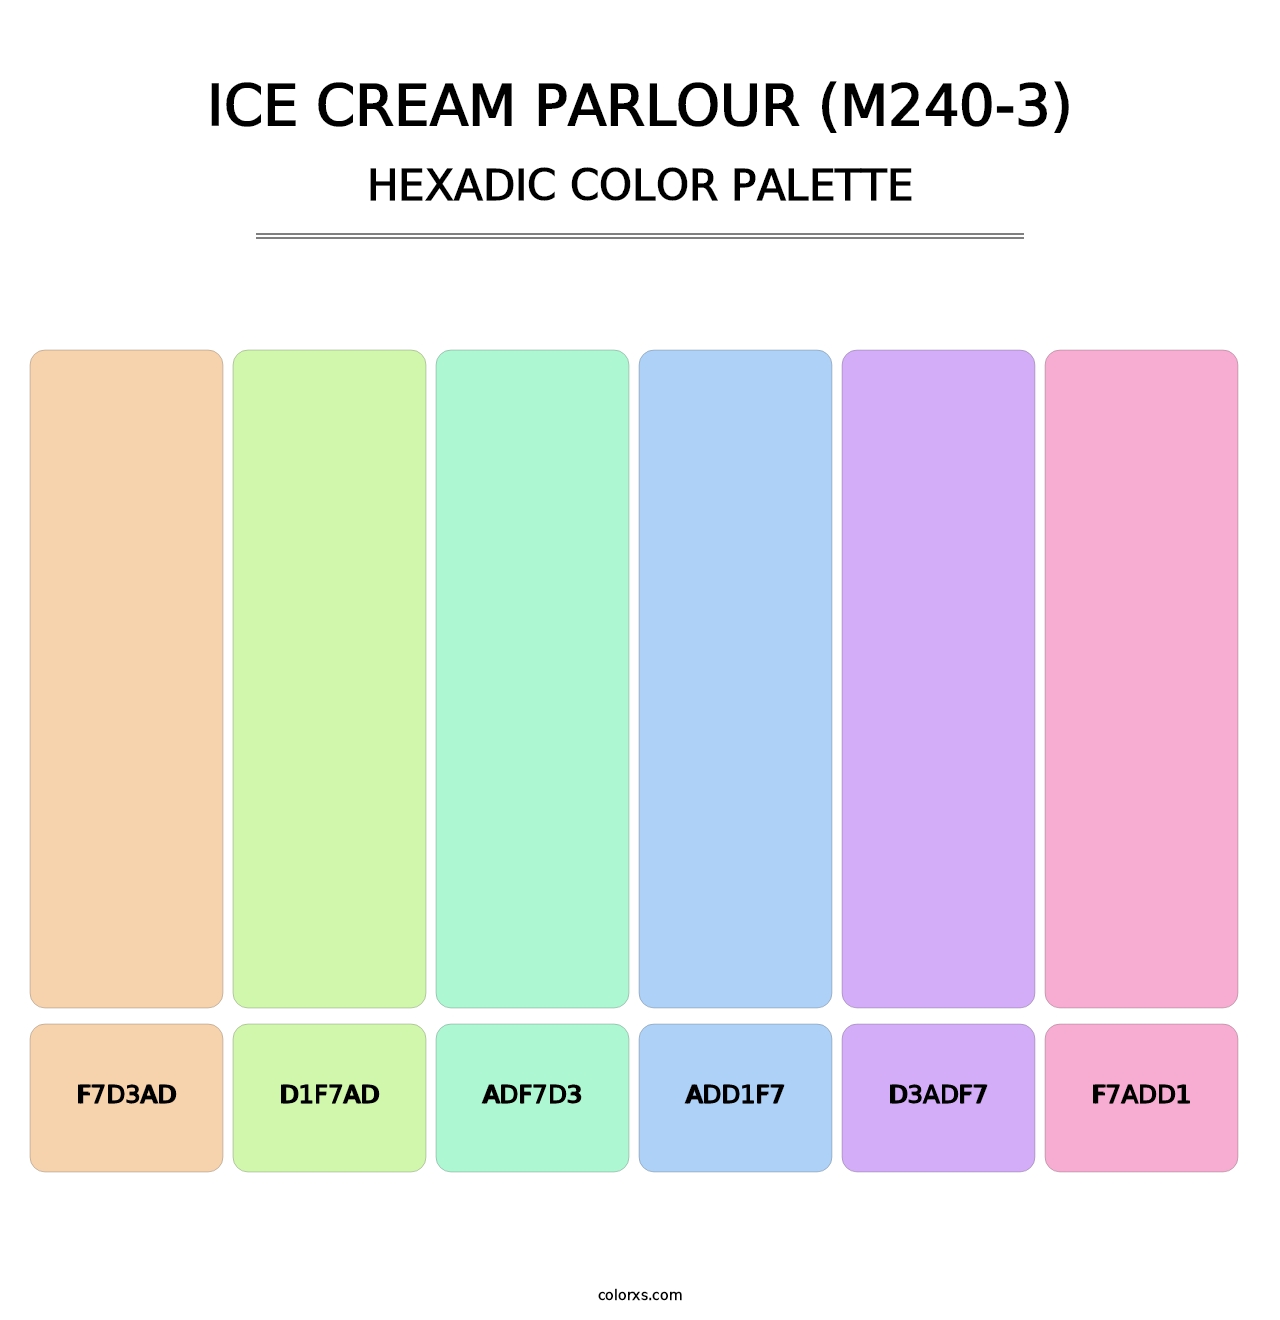 Ice Cream Parlour (M240-3) - Hexadic Color Palette